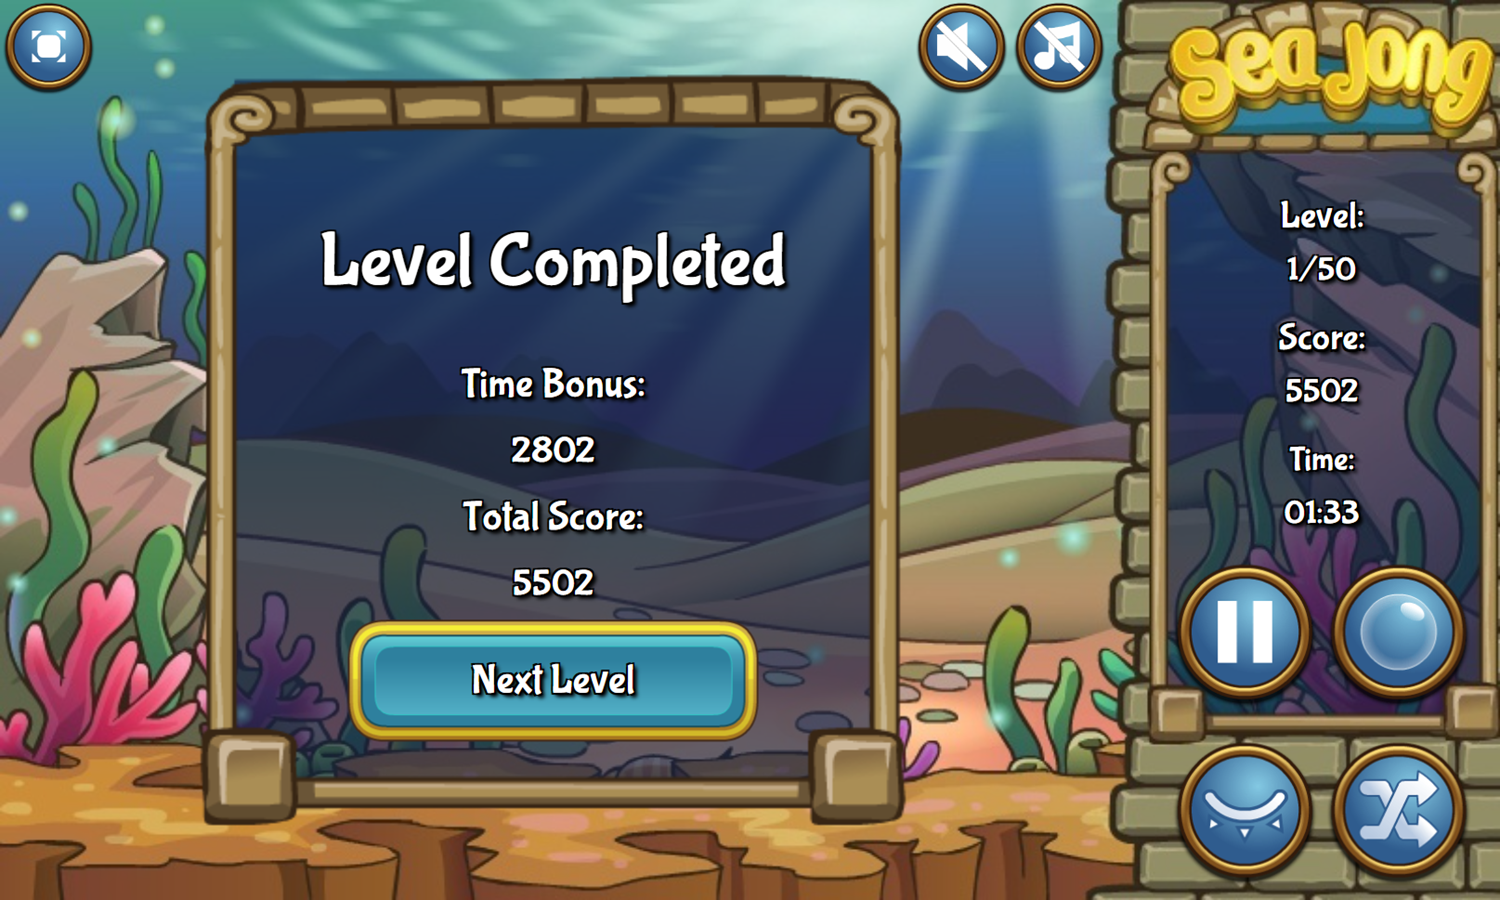 Seajong Game Level Completed Screenshot.